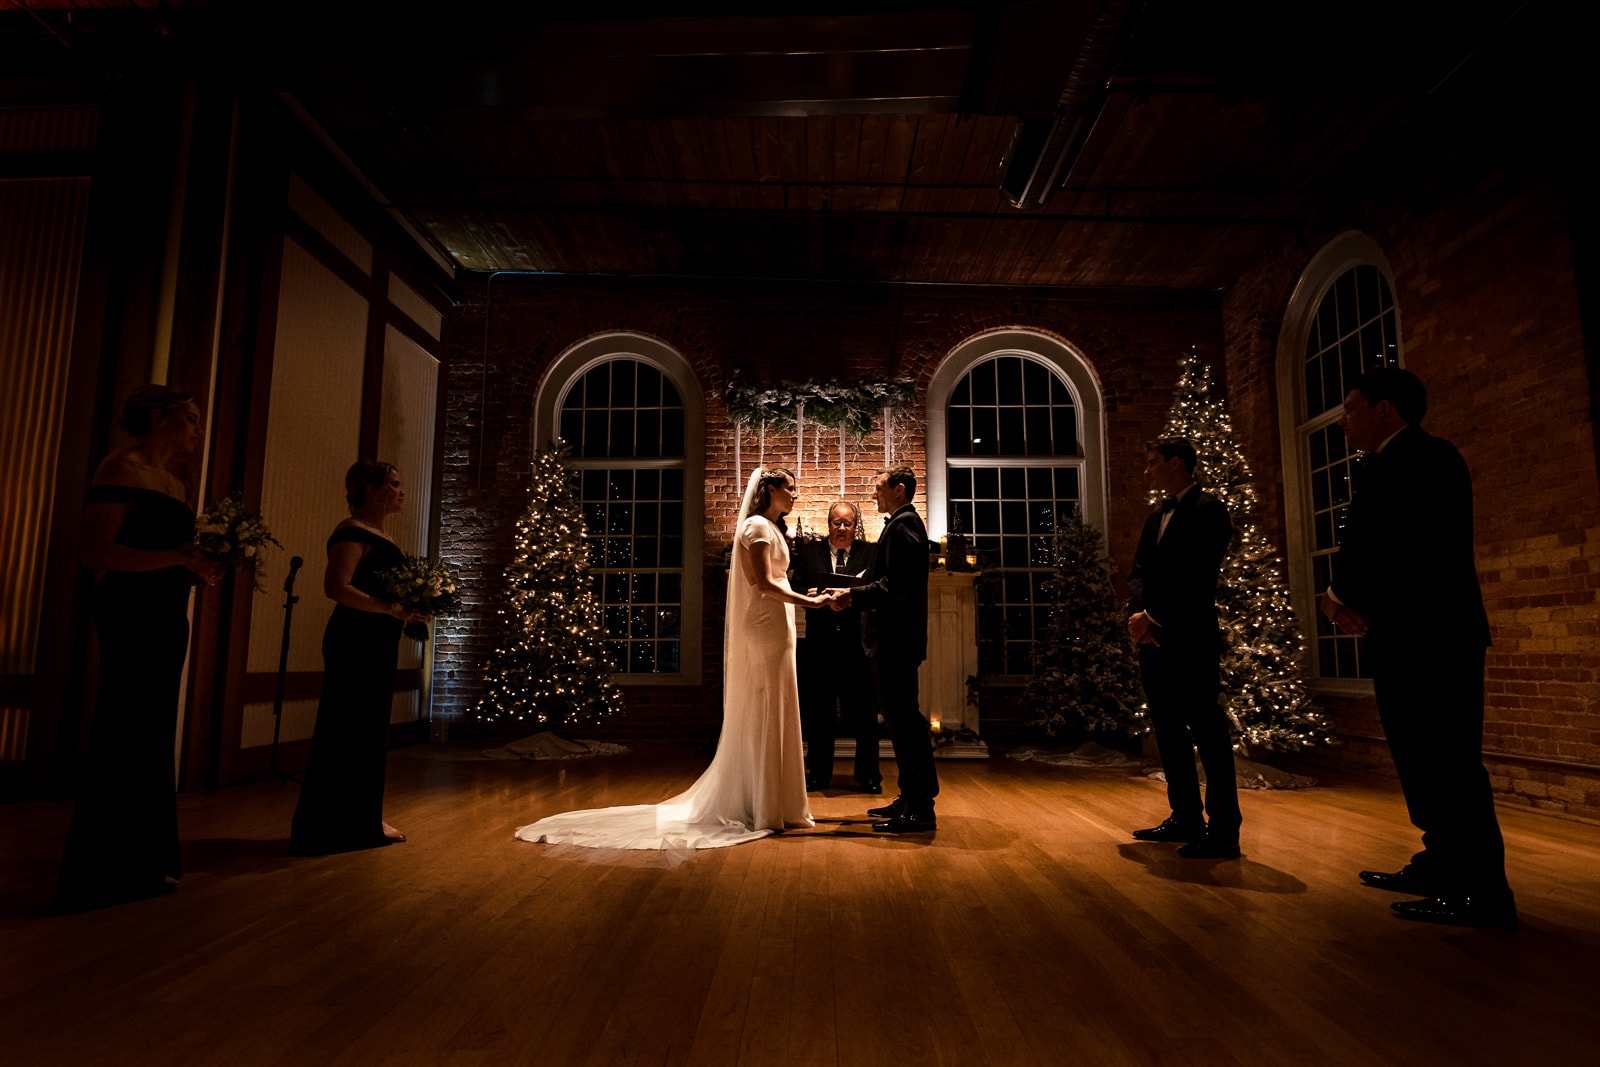 Emotional wedding ceremony | photo by Kivus & Camera